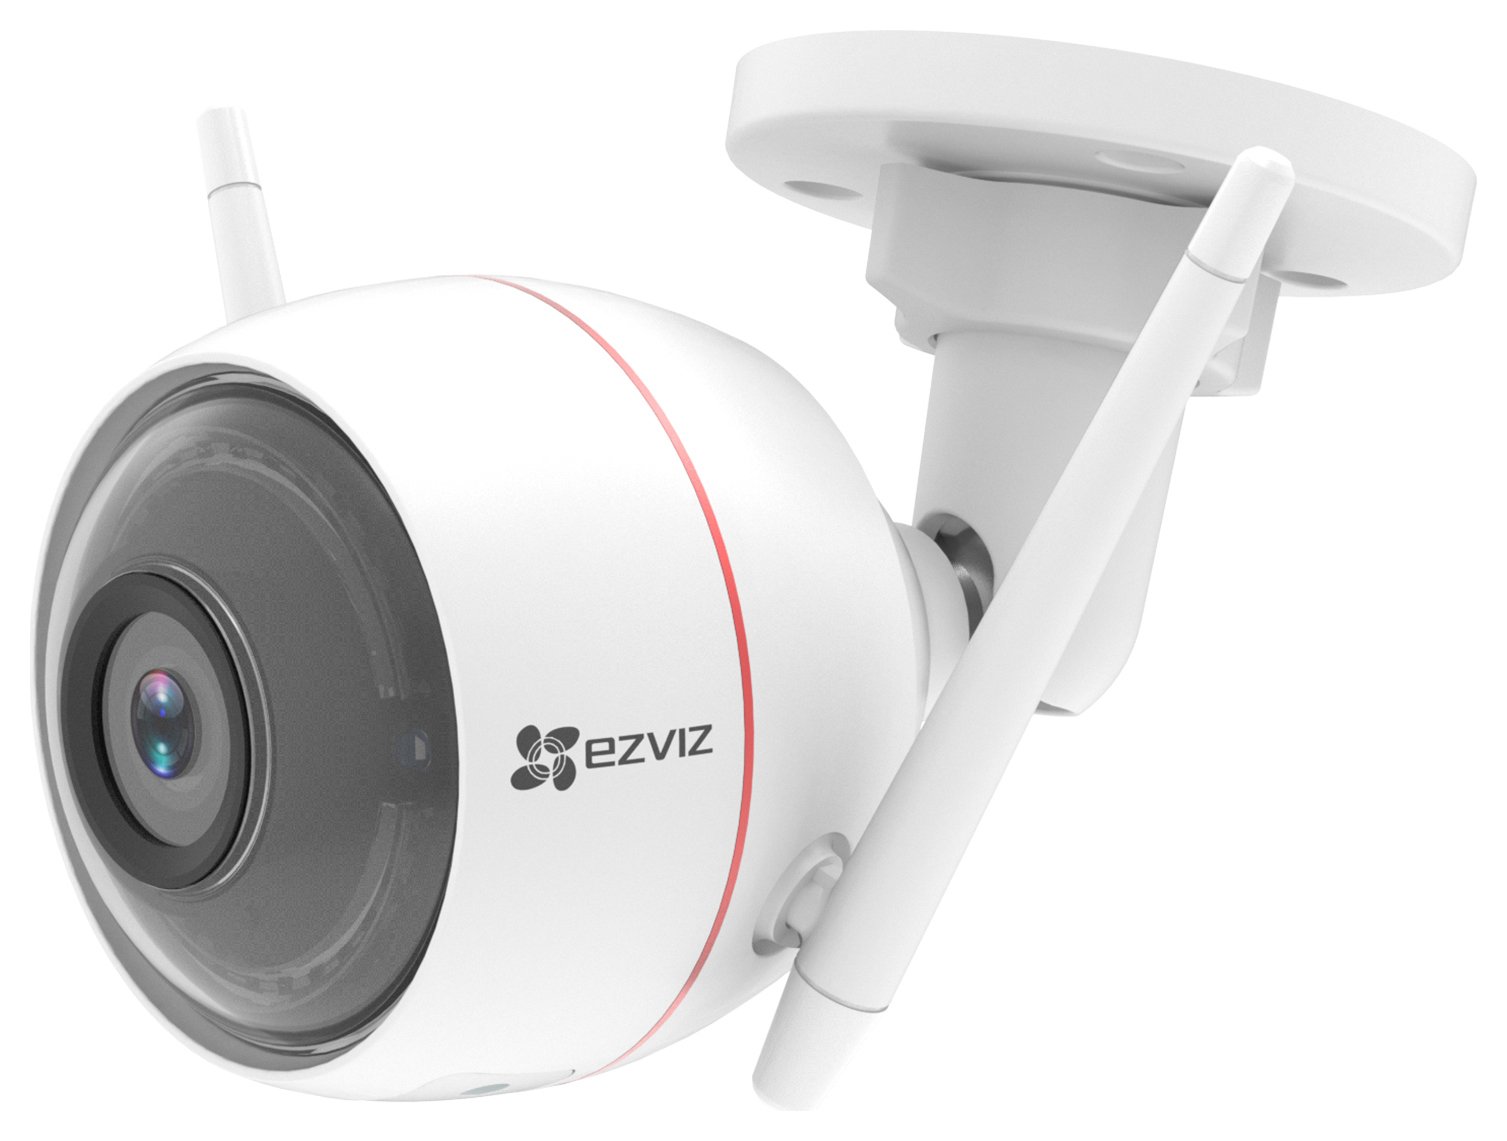 EZVIZ Full HD Wi-Fi Outdoor Security Camera + Siren/Strobe review